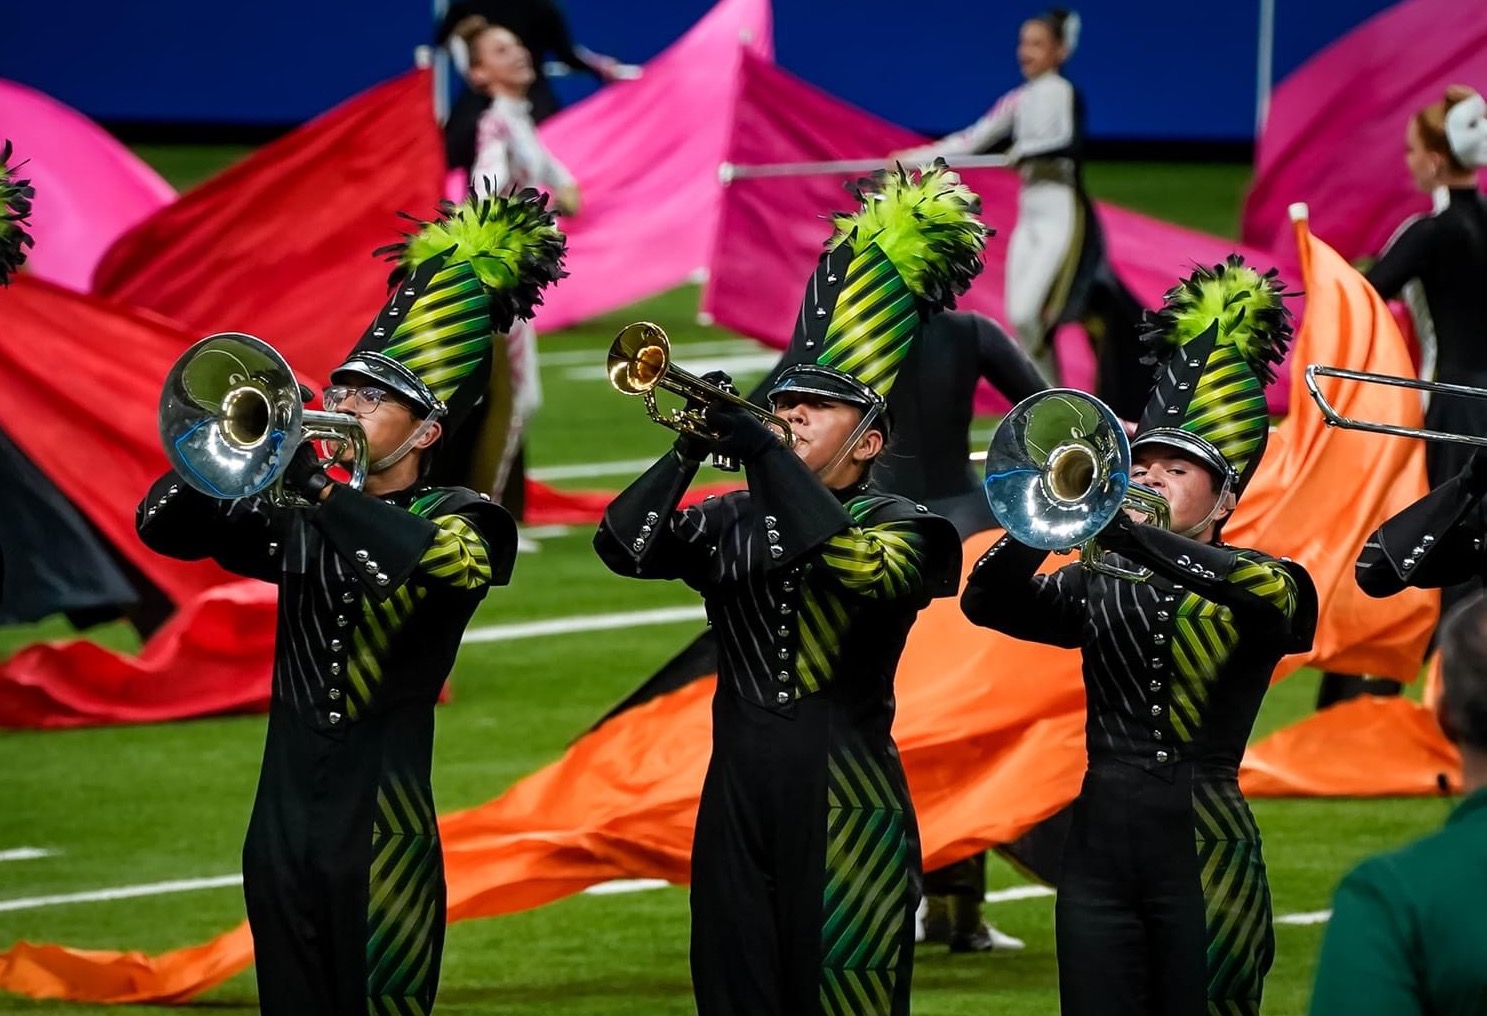 Green marching band uniform  Marching band, Band uniforms, Marching band  uniforms